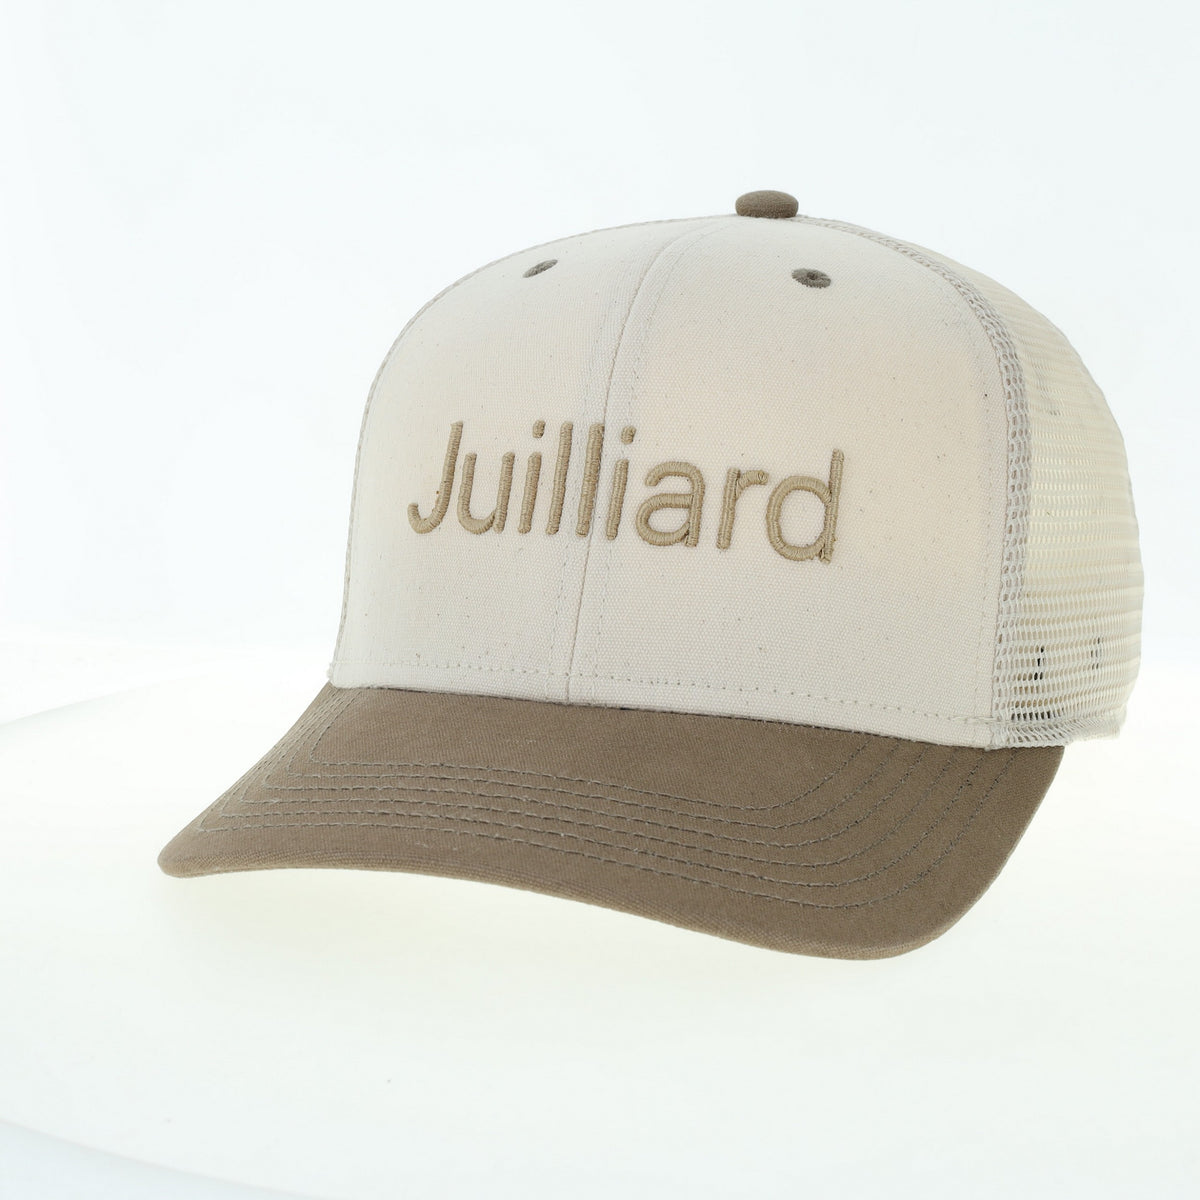 Cap: Mesh back mid pro snapback Juilliard logo